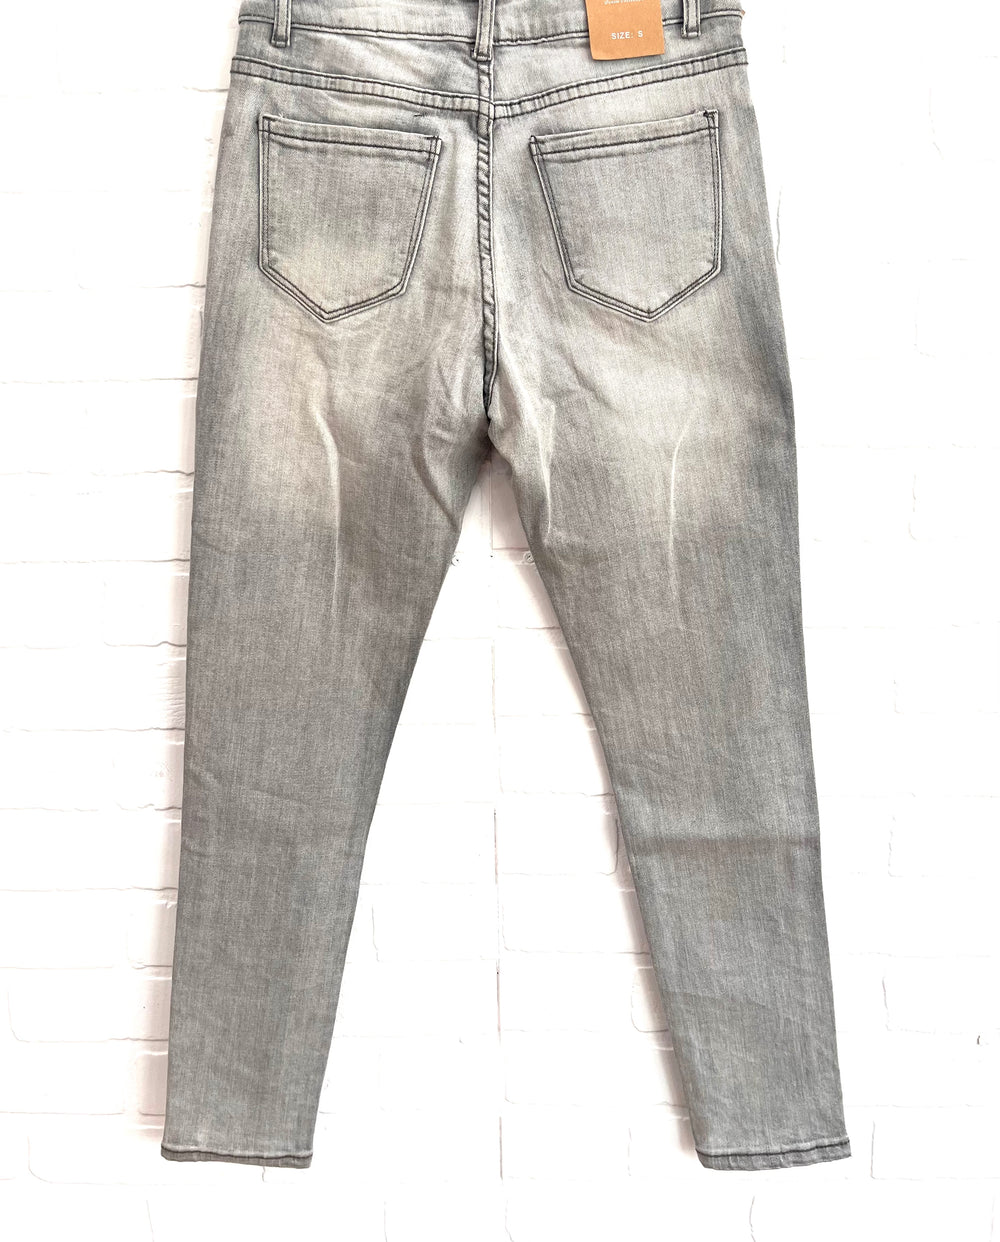 Grey sparkle jeans